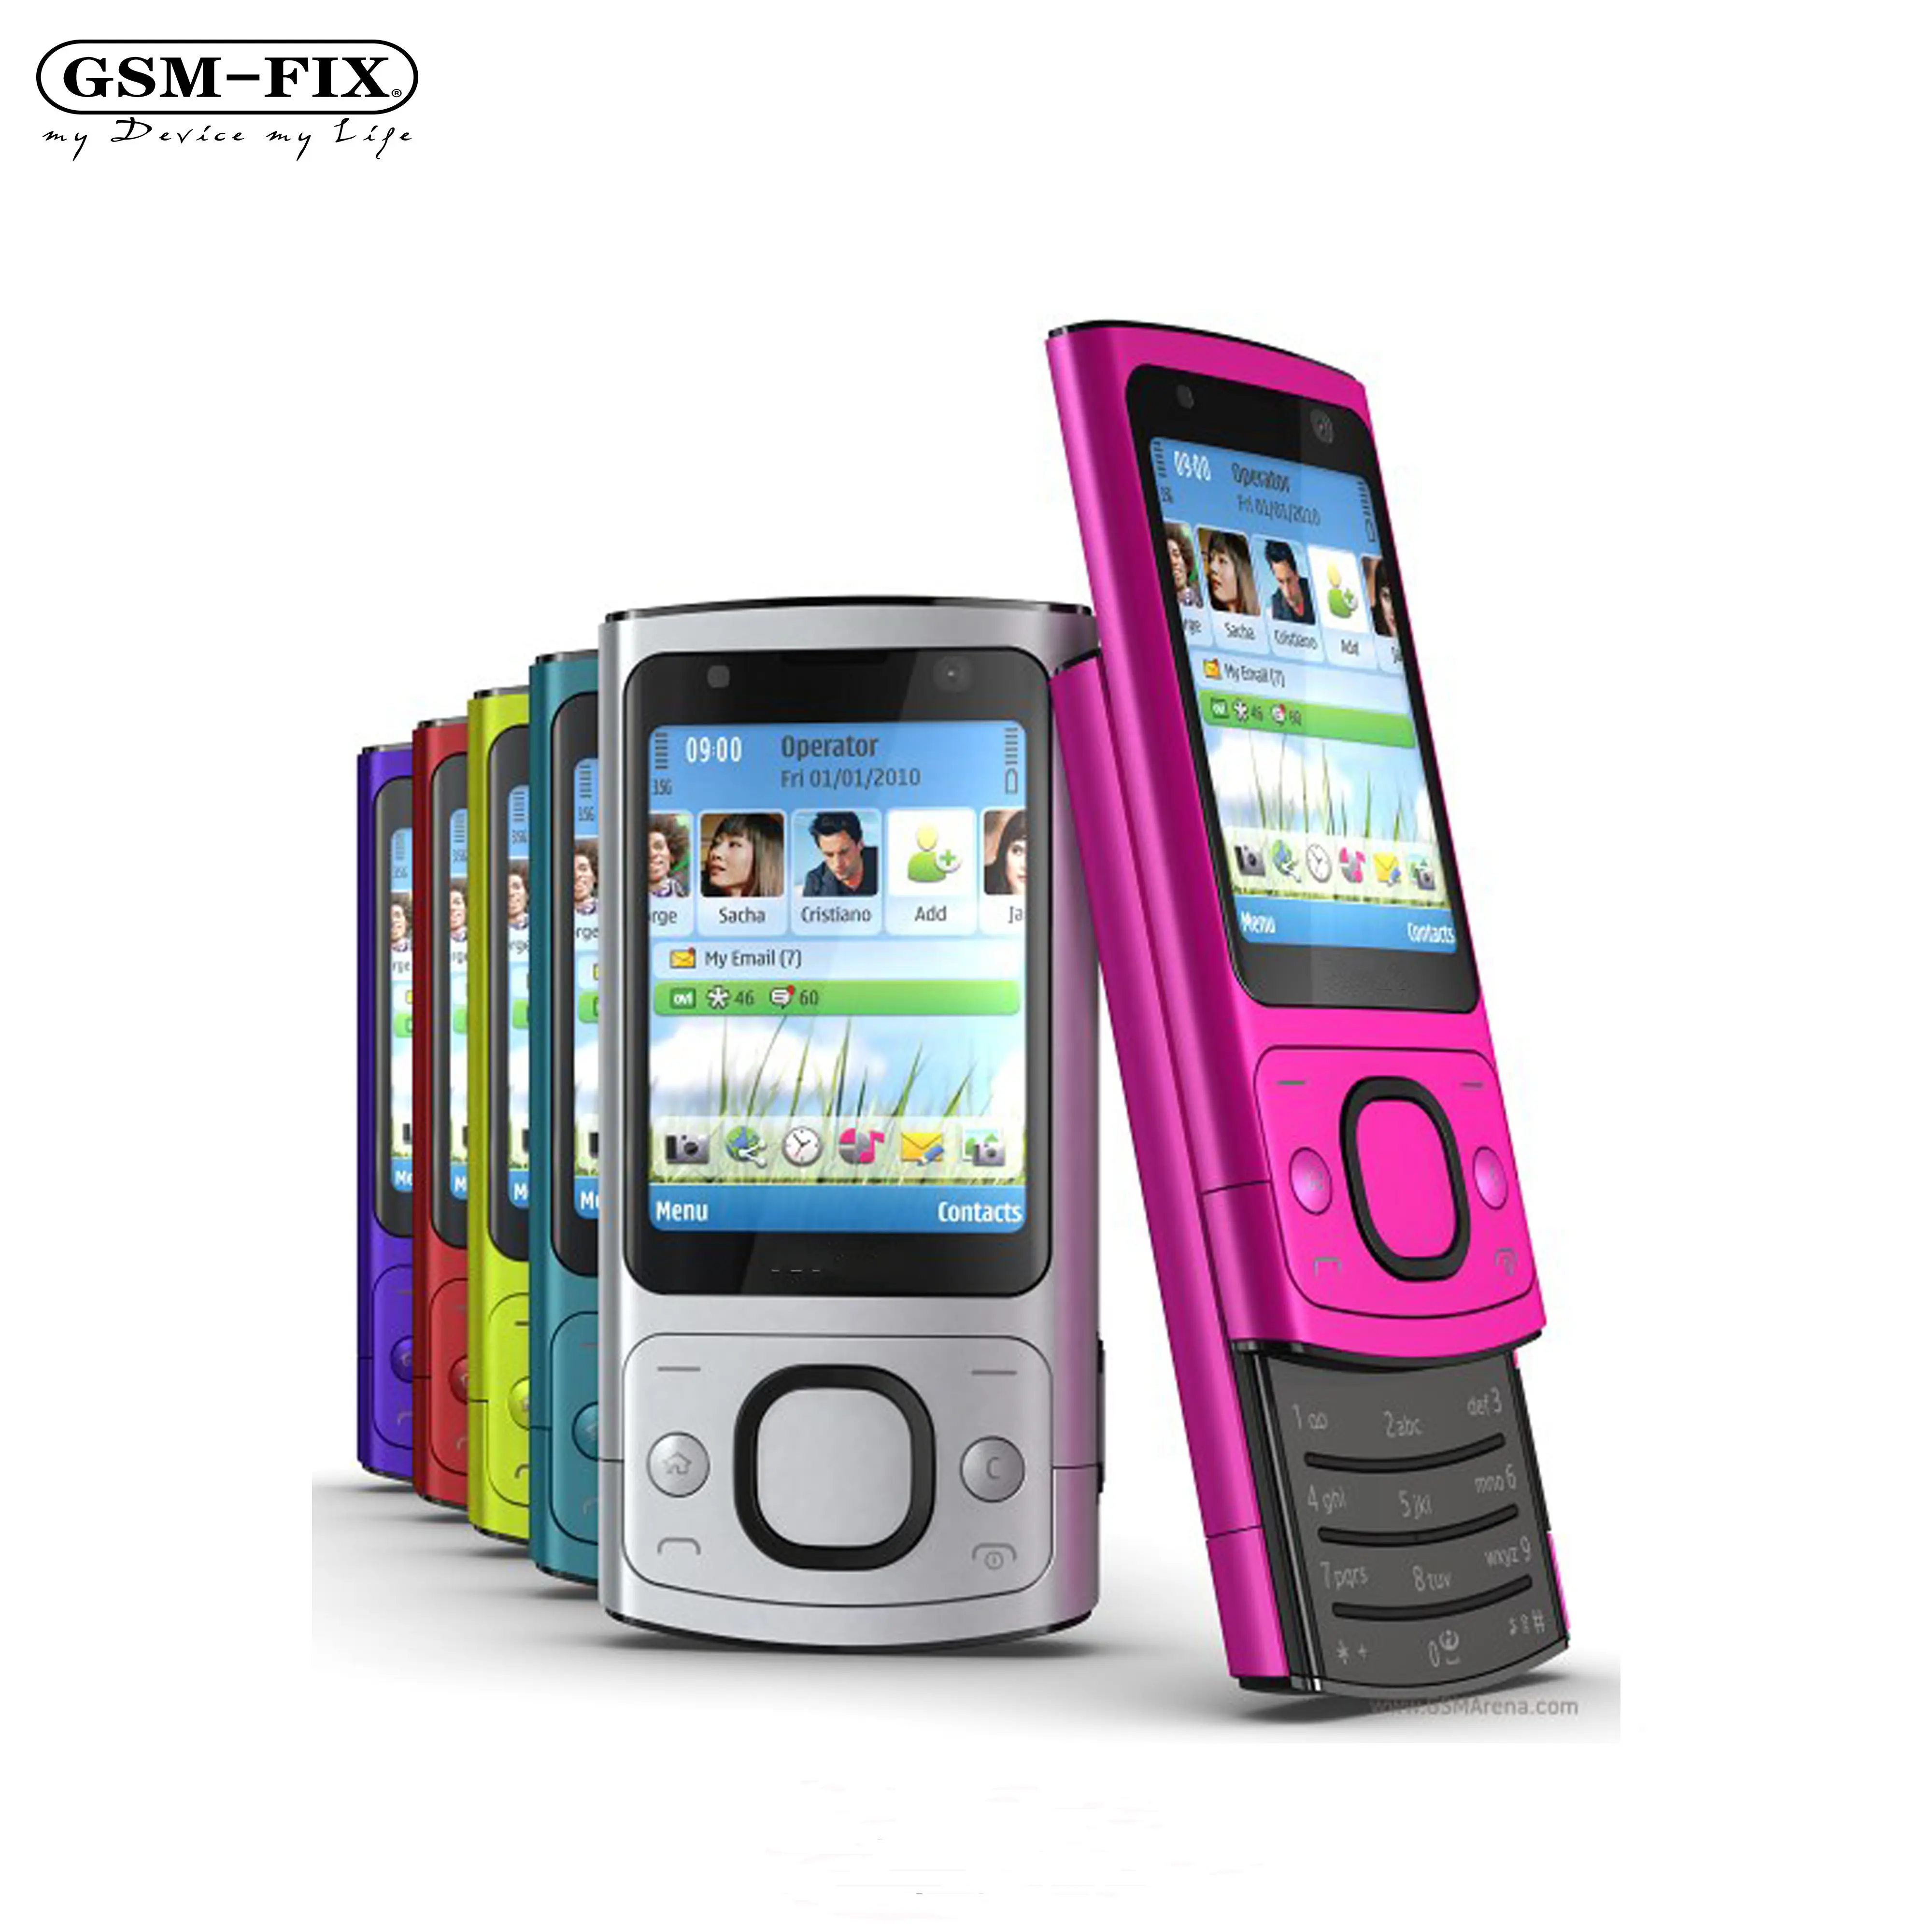 GSM-FIX 6700 S ดั้งเดิมสำหรับ NOKIA โทรศัพท์มือถือกล้อง5.0MP,บลูทูธชวาปลดล็อก6700โทรศัพท์สไลด์